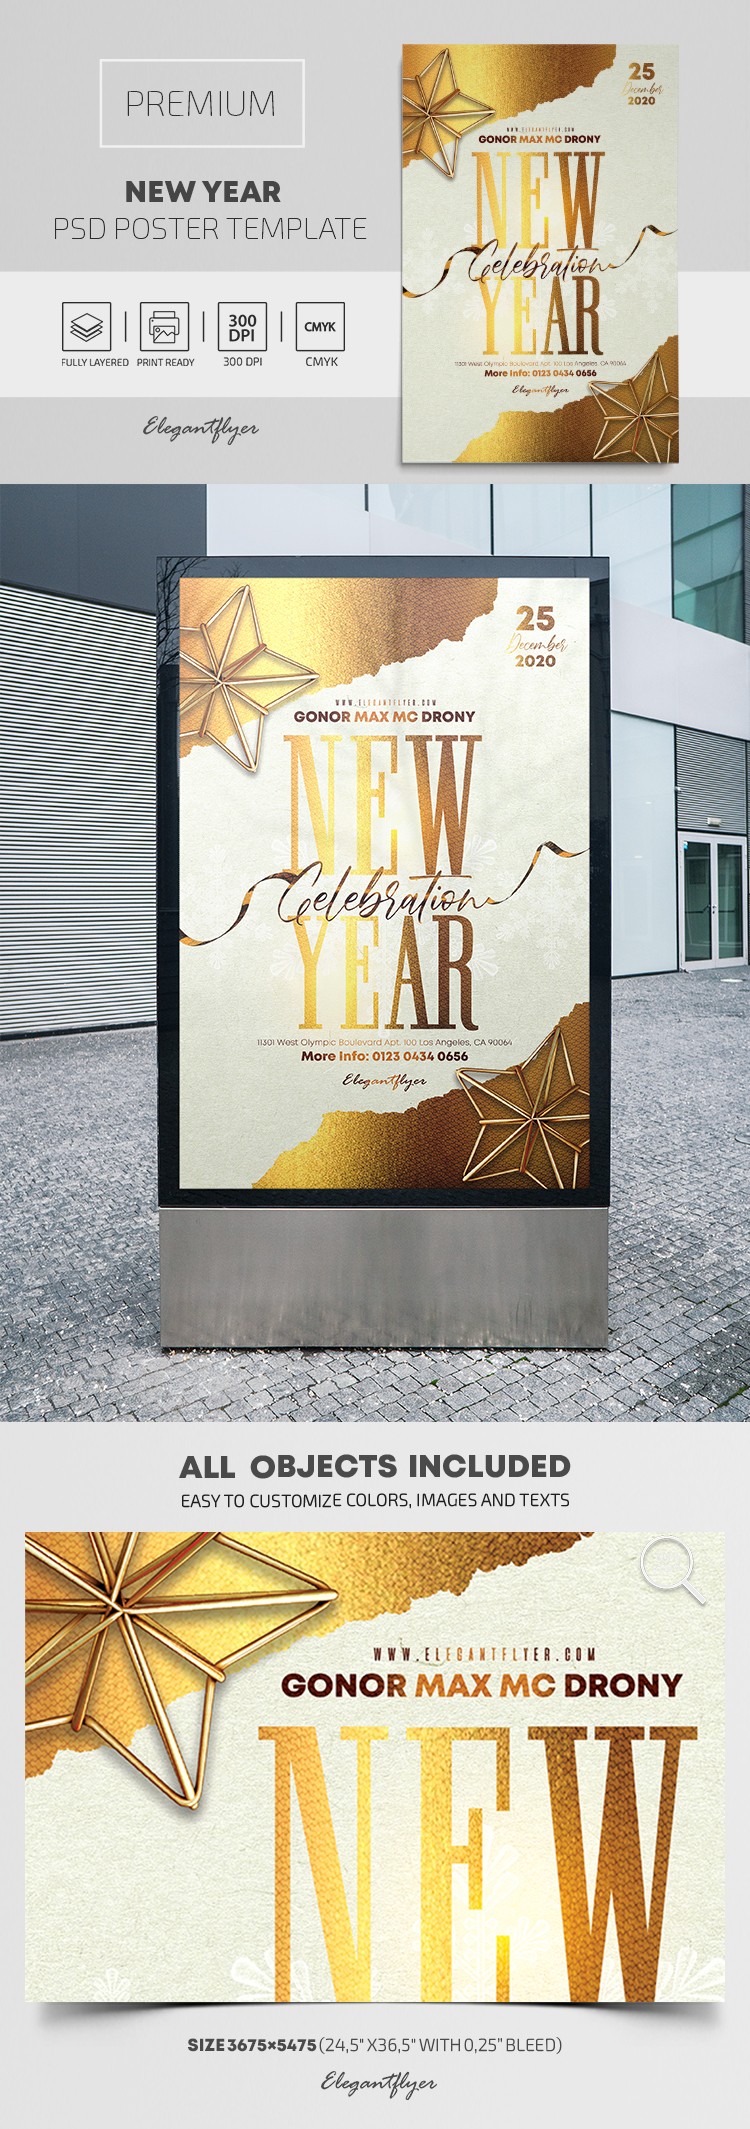 New Year Poster by ElegantFlyer